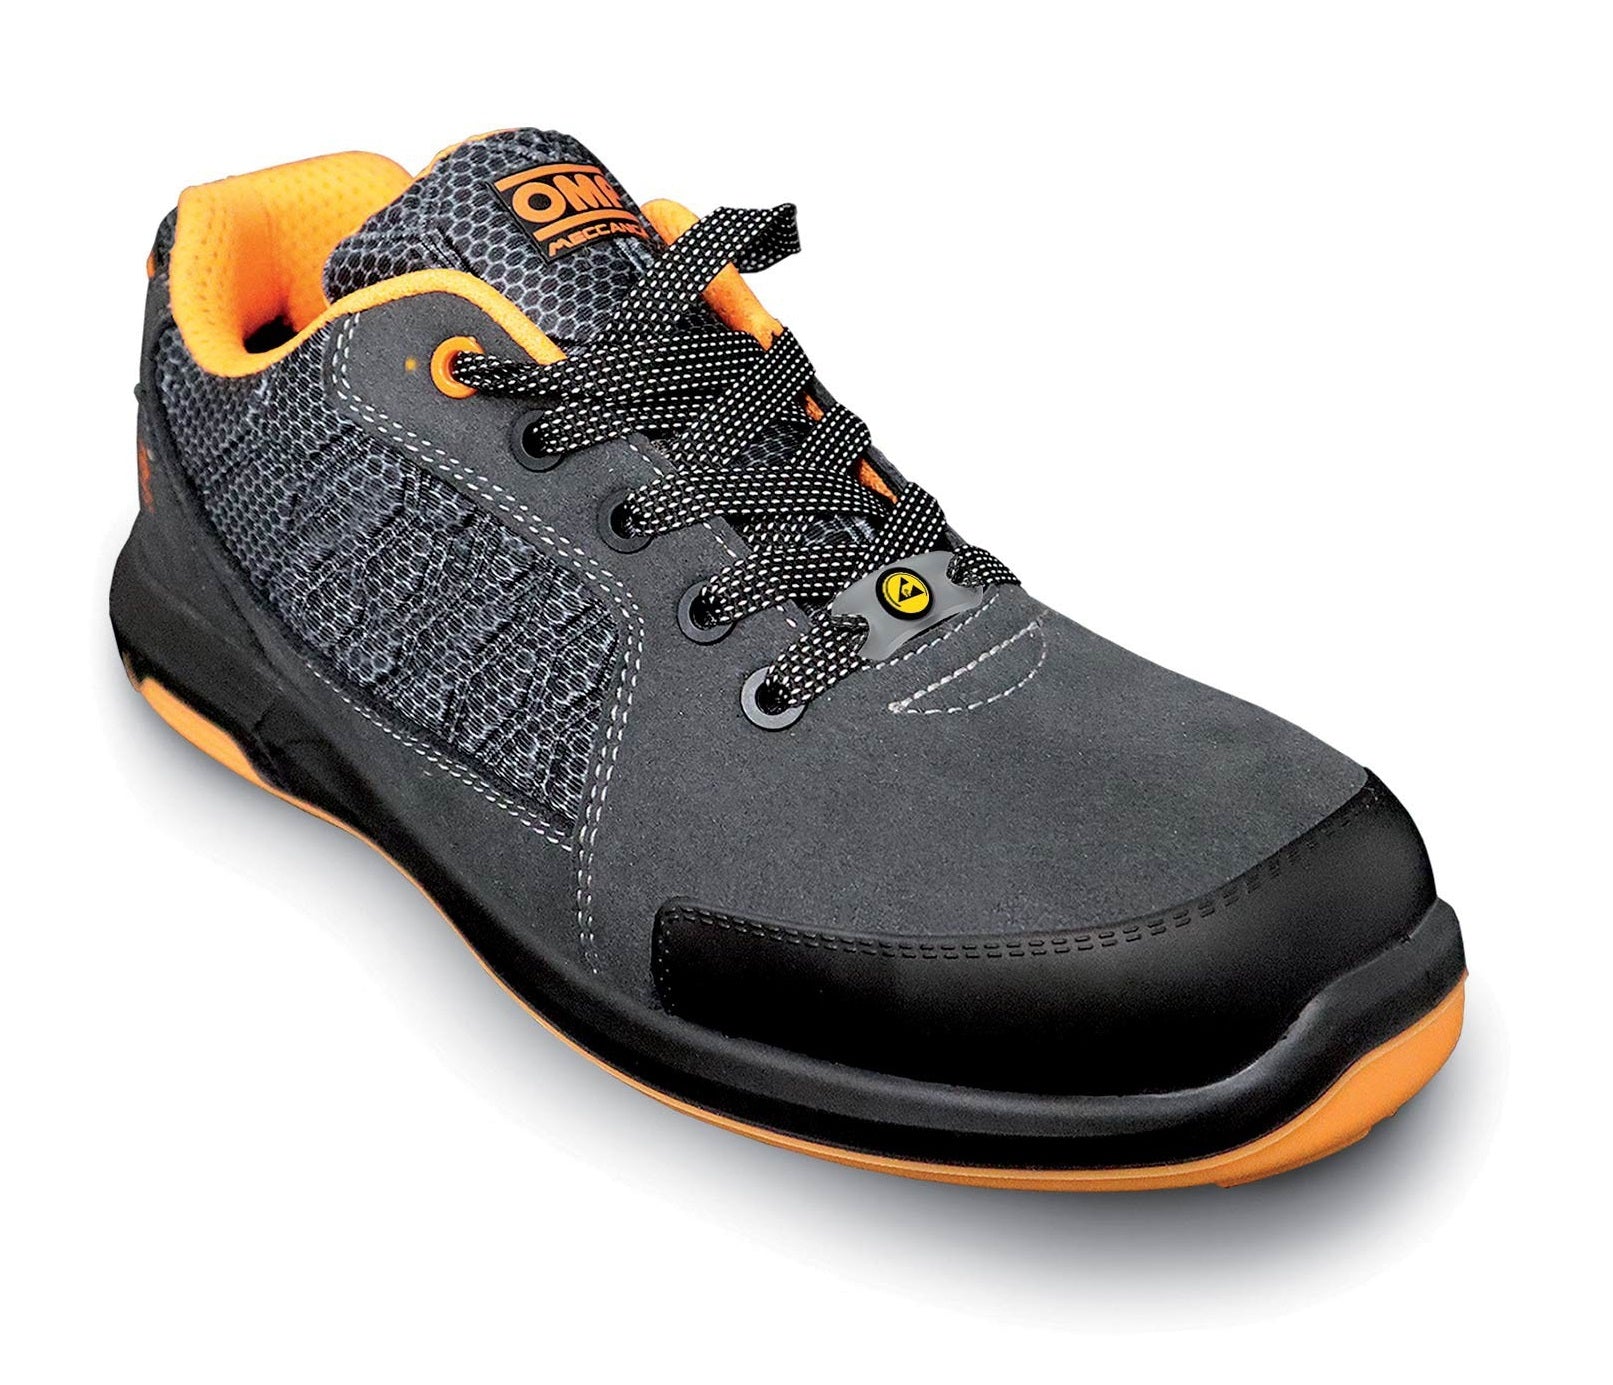 OMP OMPS90013720 Pro Sport Safety Mechanic's shoes, black/orange, size 37 Photo-0 